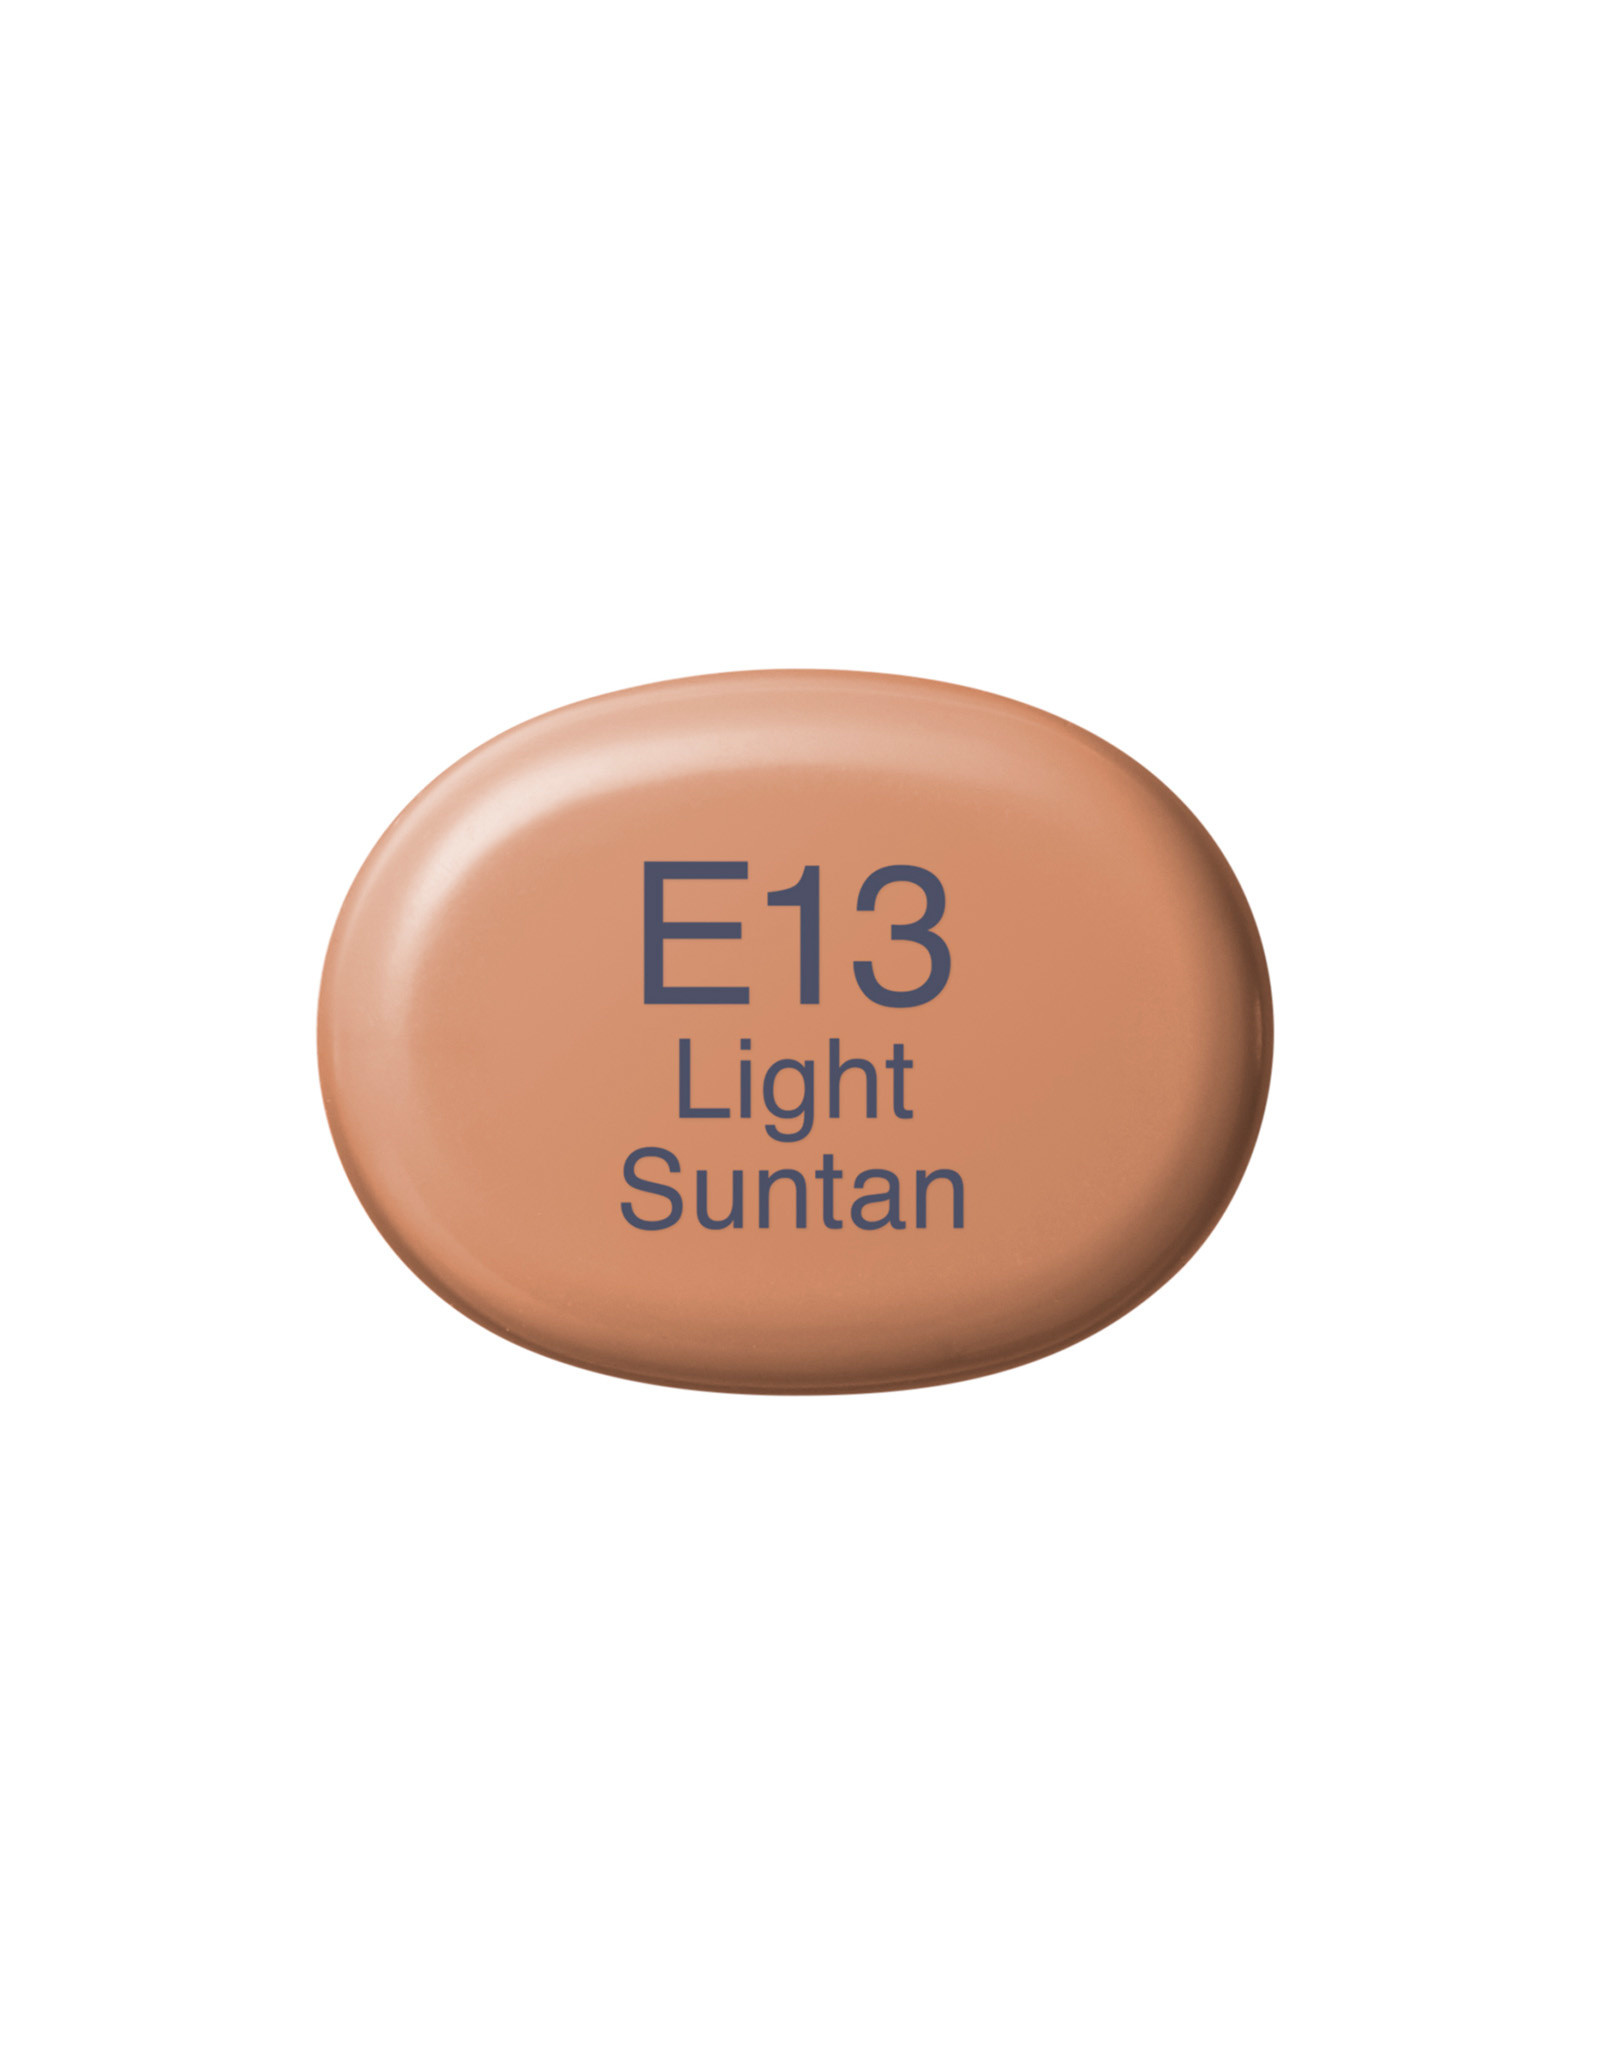 Copic Sketch Marker E13 Light Suntan